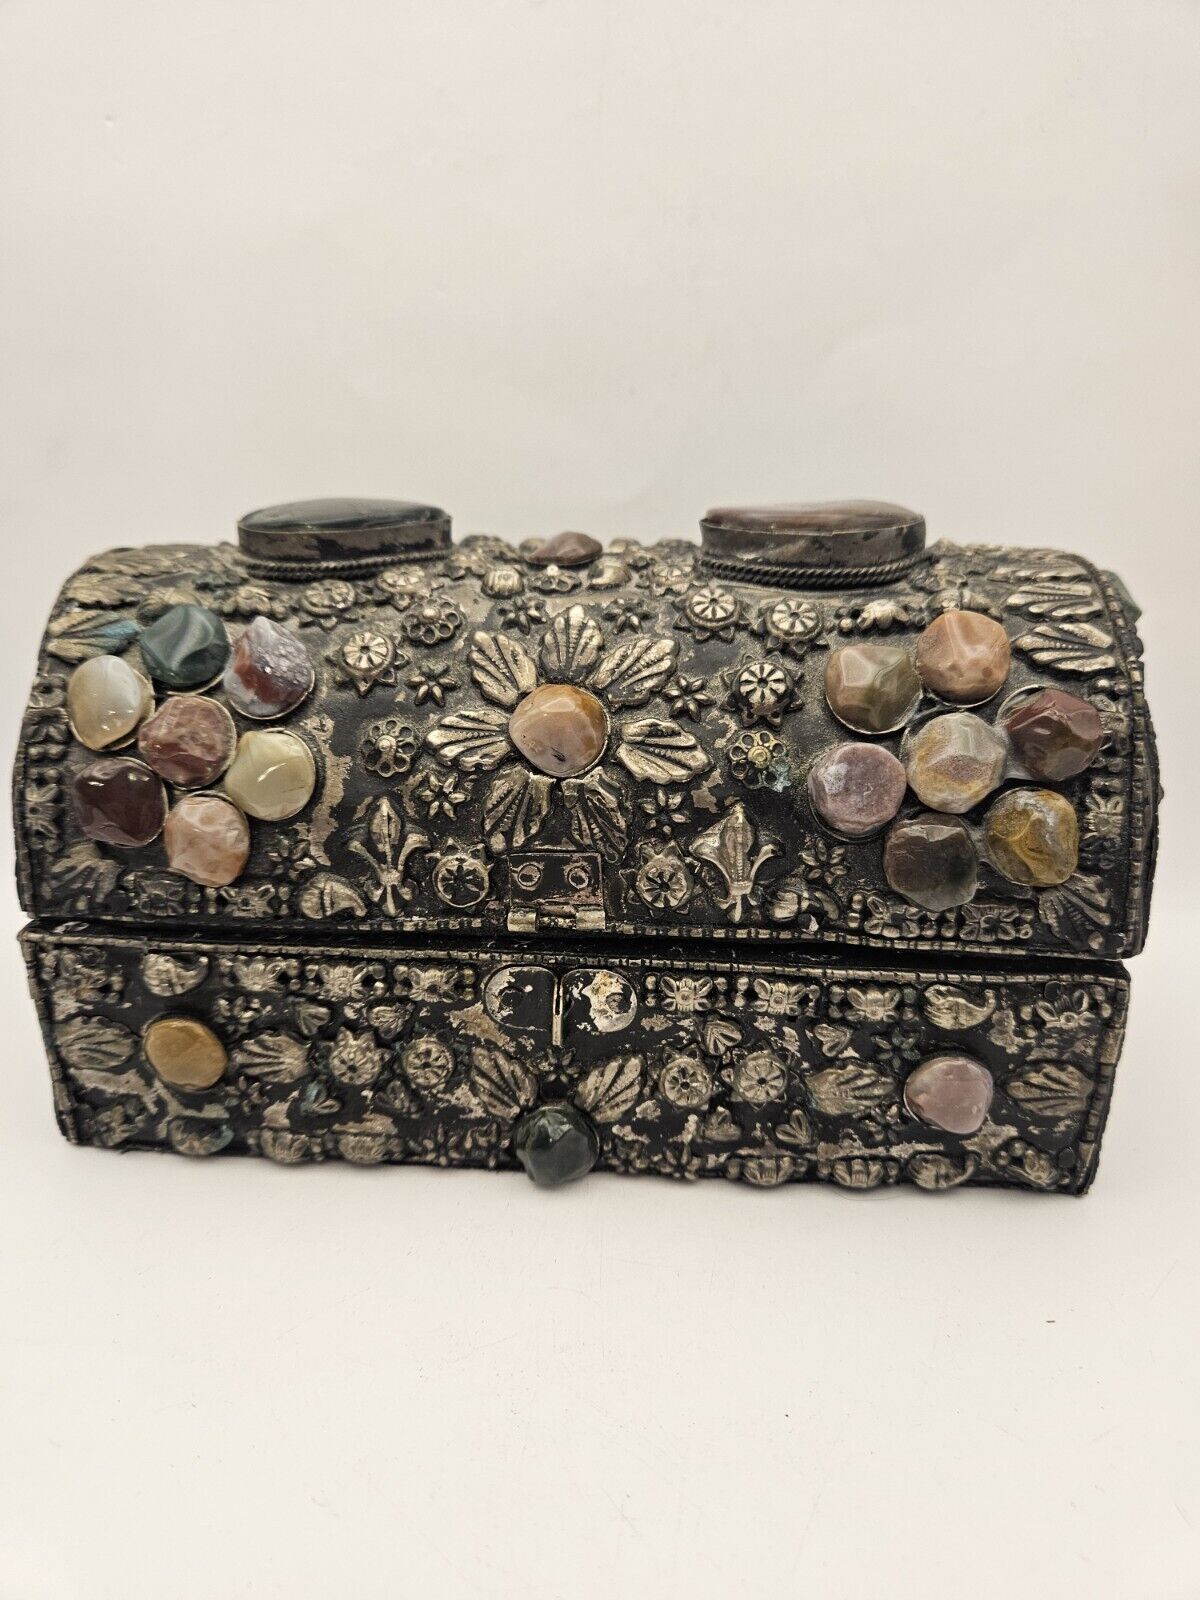 Moroccan Wedding Silvered Jewelry Box Inlaid Semi Precious Stones A/IS No Latch